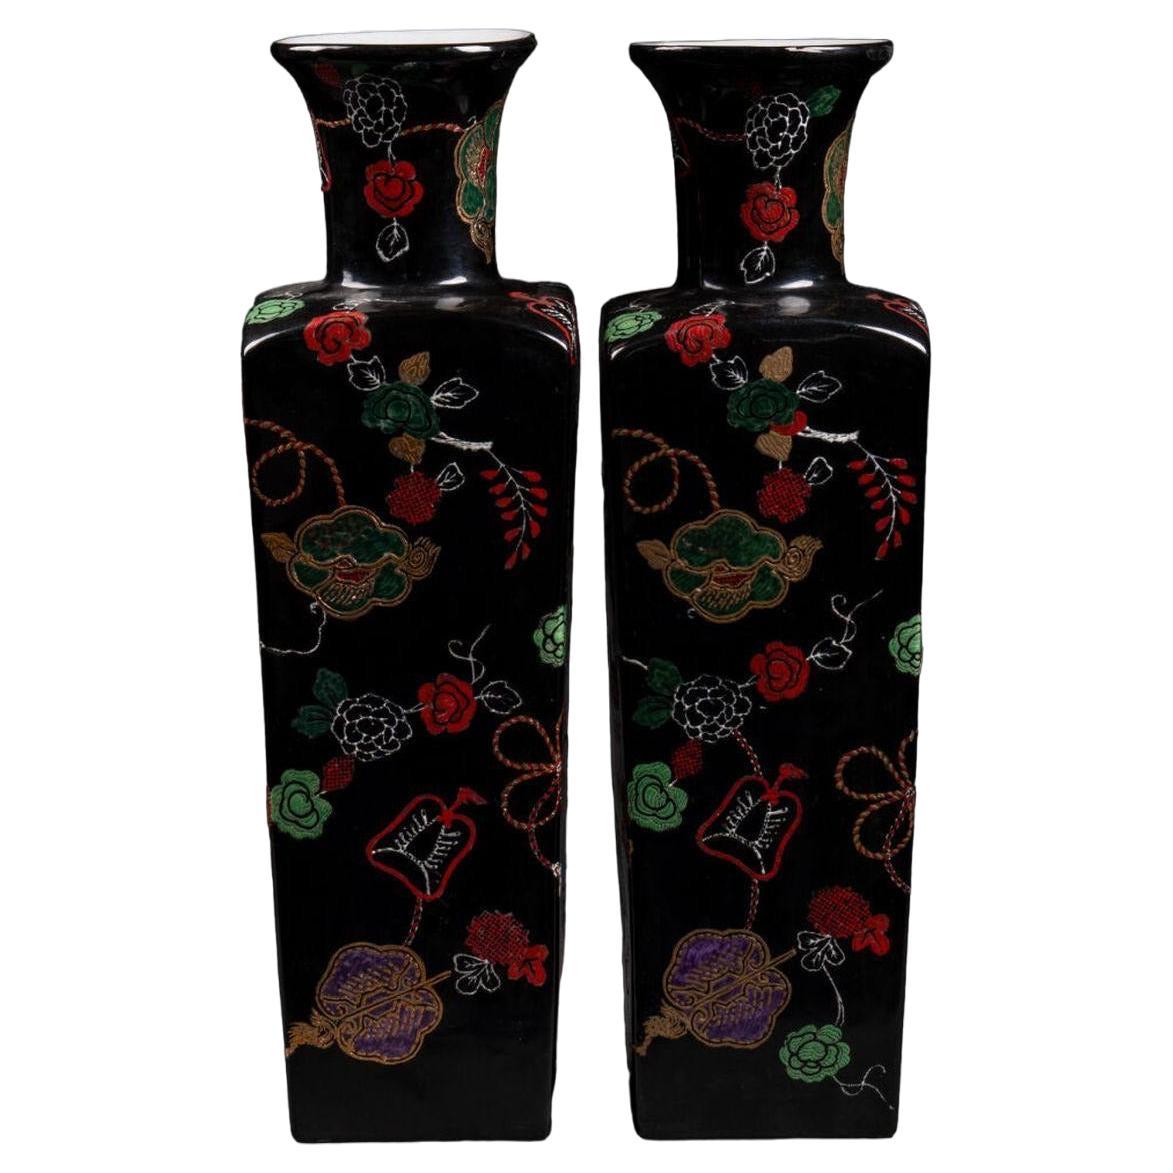 Pair of Large Polychromed Vases by the designer Kenzo Takada (1939-2020)